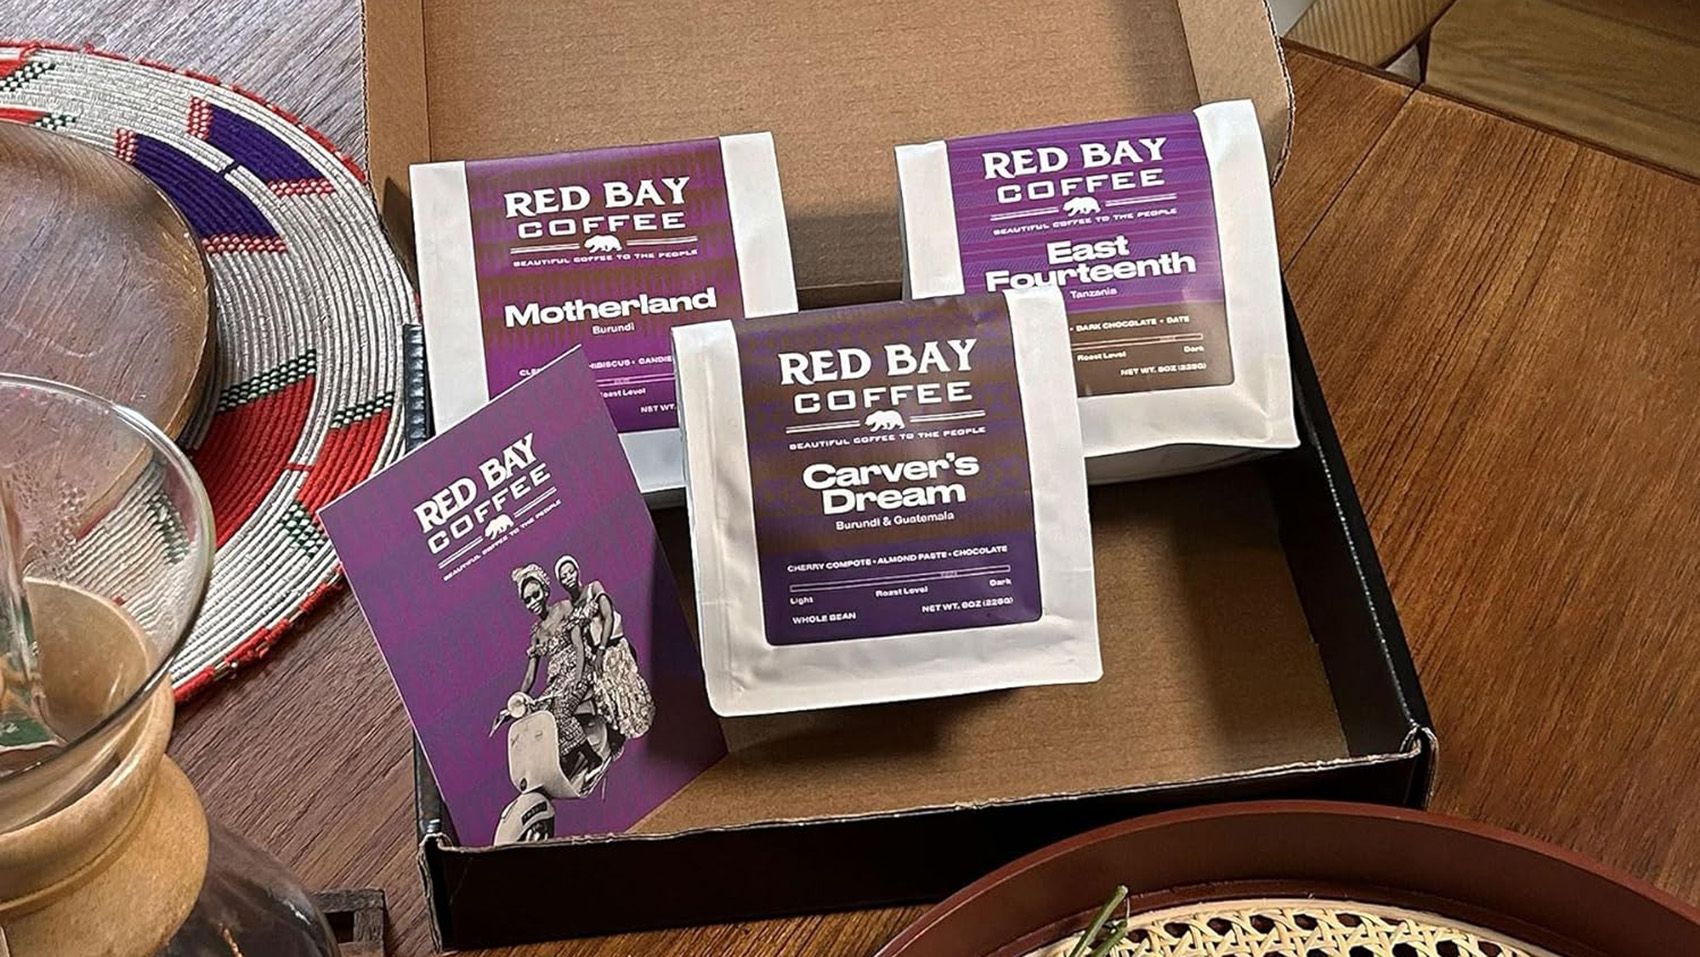 https://media.cnn.com/api/v1/images/stellar/prod/underscored-red-bay-coffee-holiday-gift-set.jpg?c=original